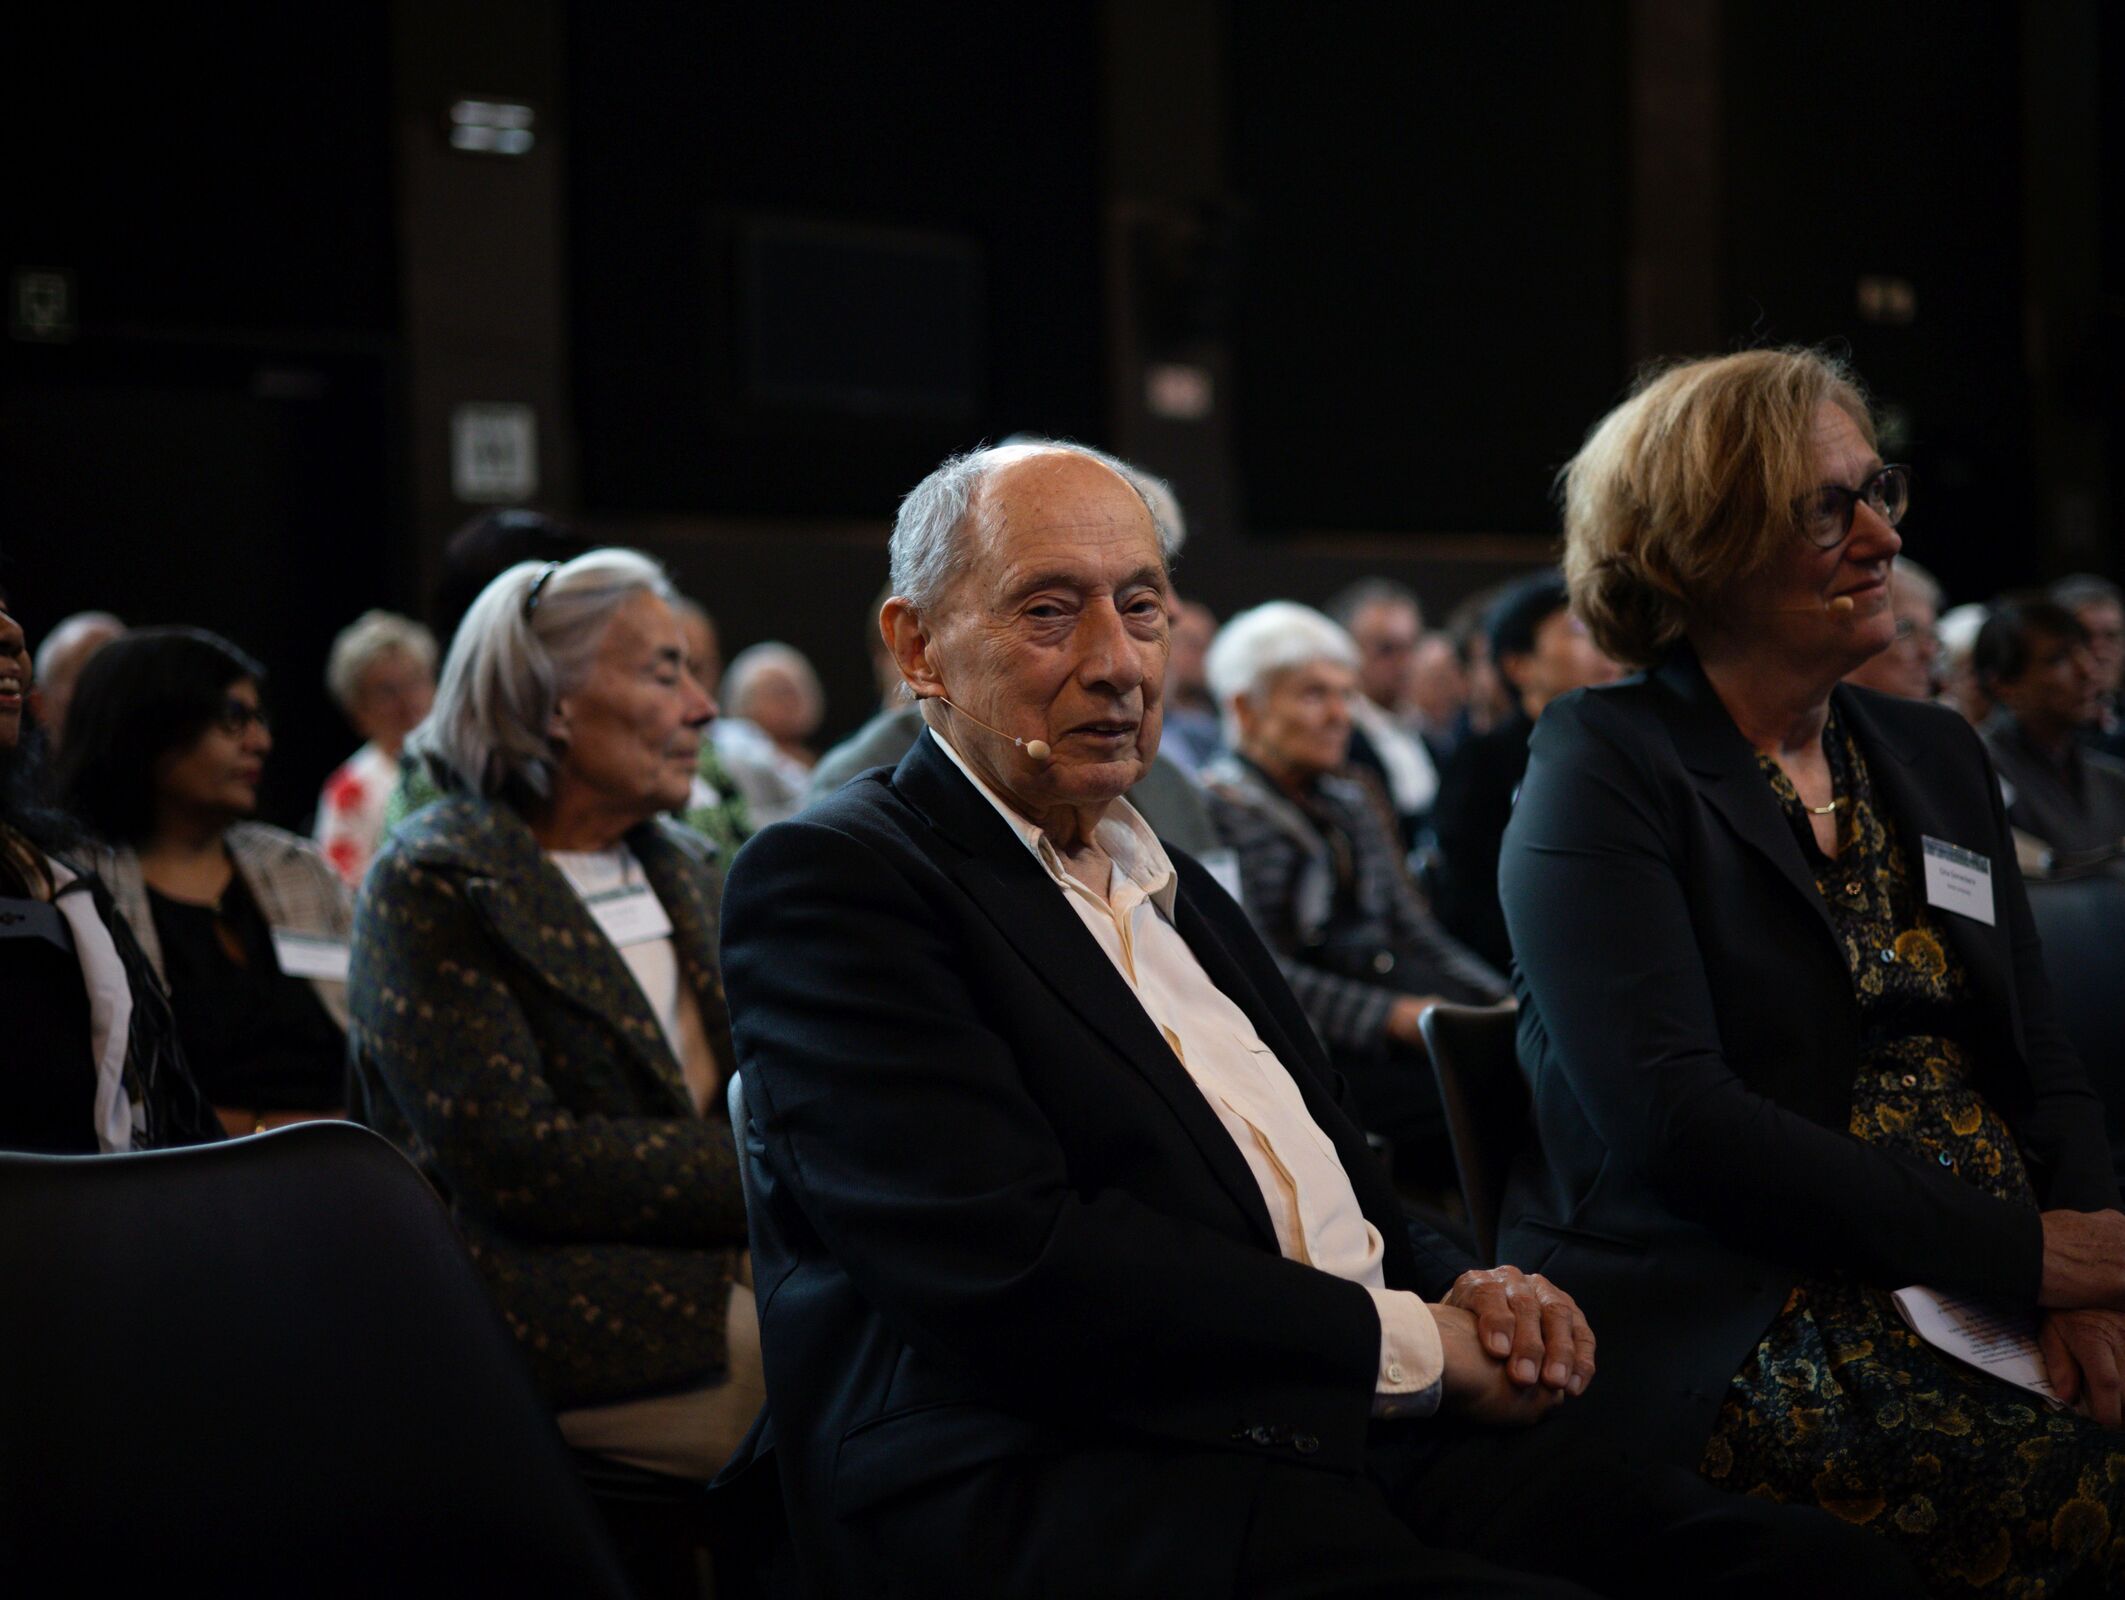 Marc Van Montagu on his 90th birthday party organized by VIB